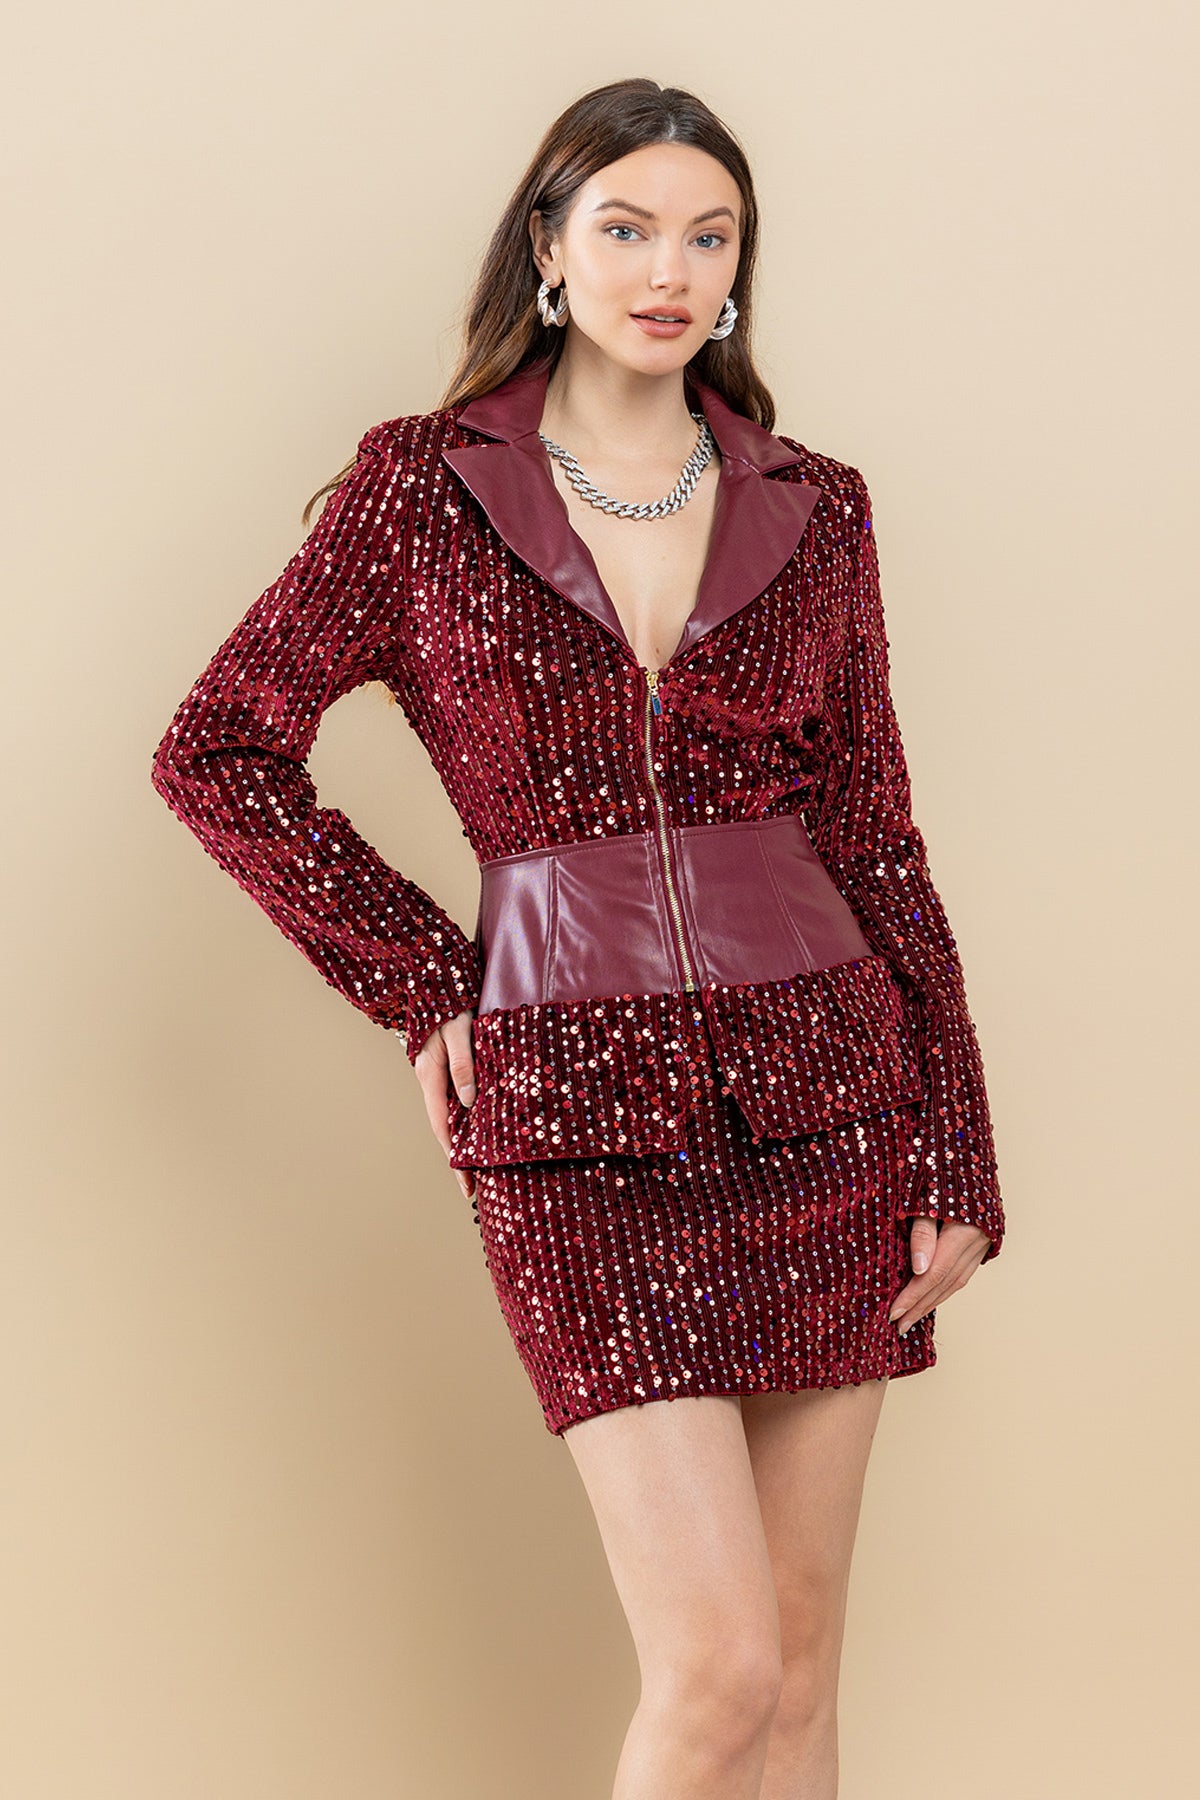 Cocktail Dresses Sequin Zip Up Long Sleeve Jacket Shirt Set Burgundy